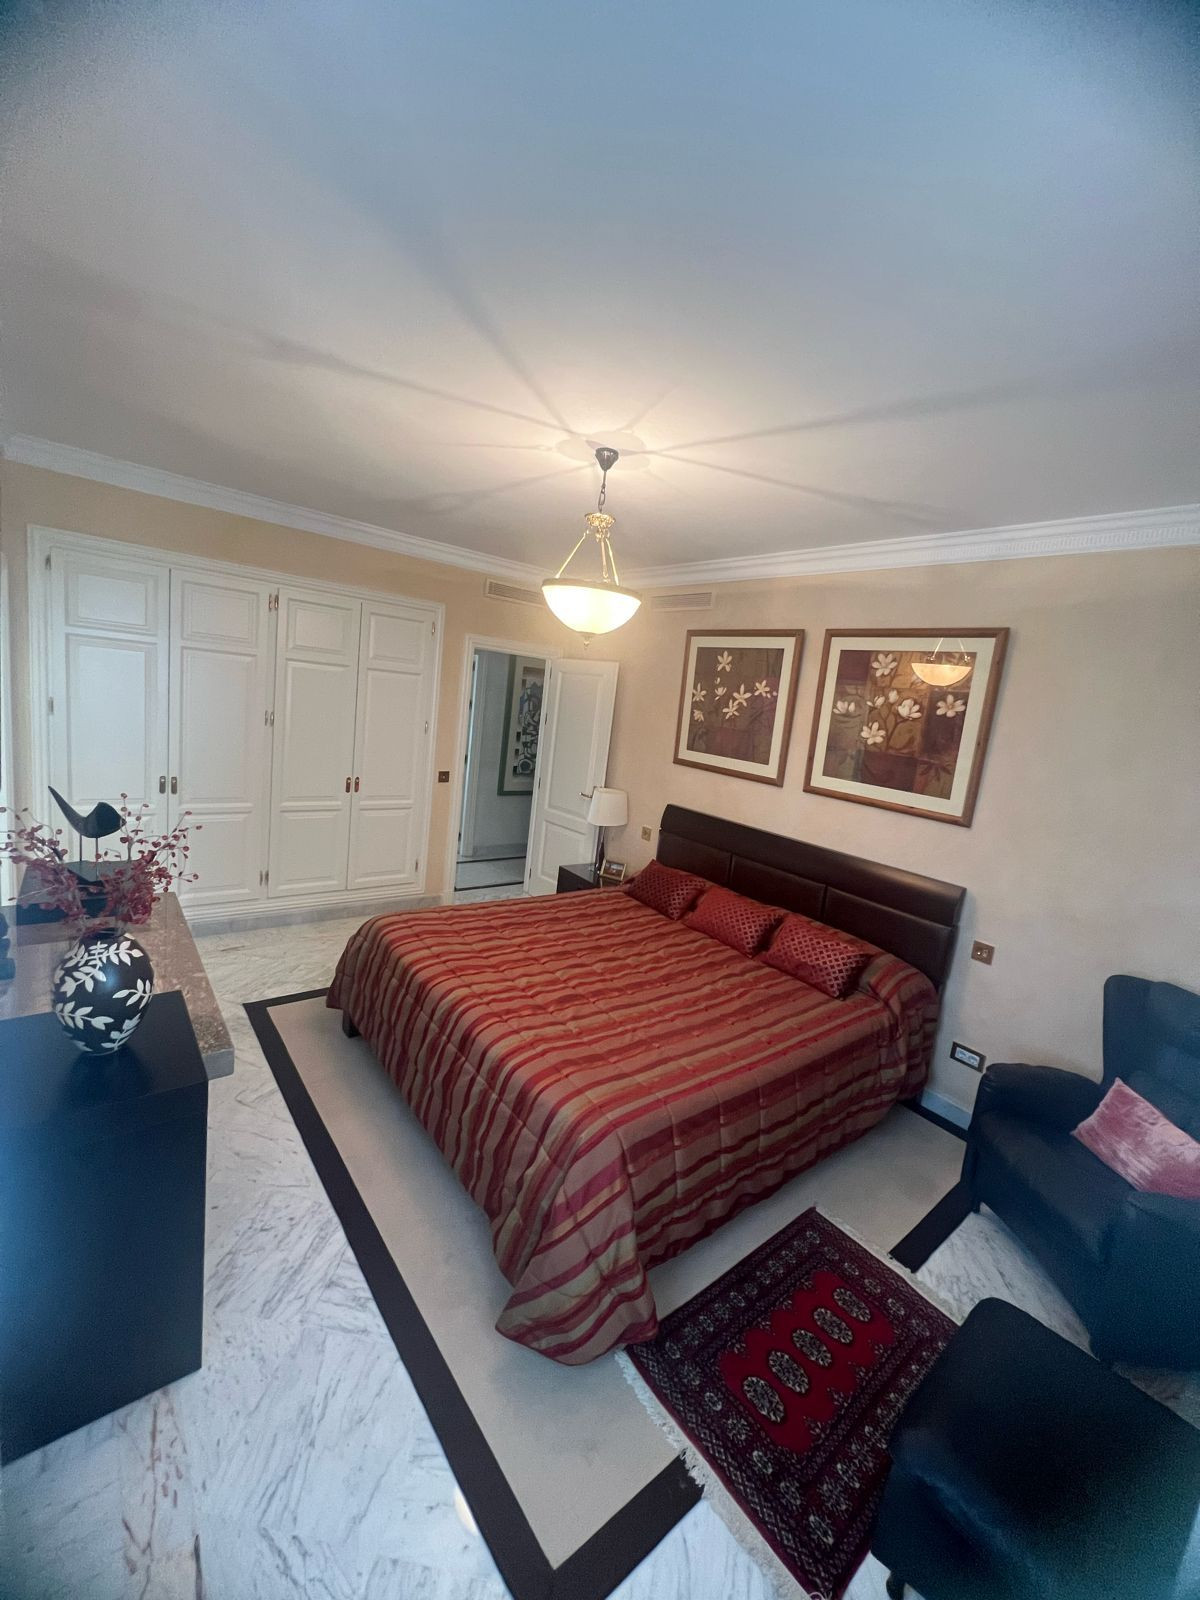 4 Bedroom Penthouse Duplex Apartment For Sale Marbella